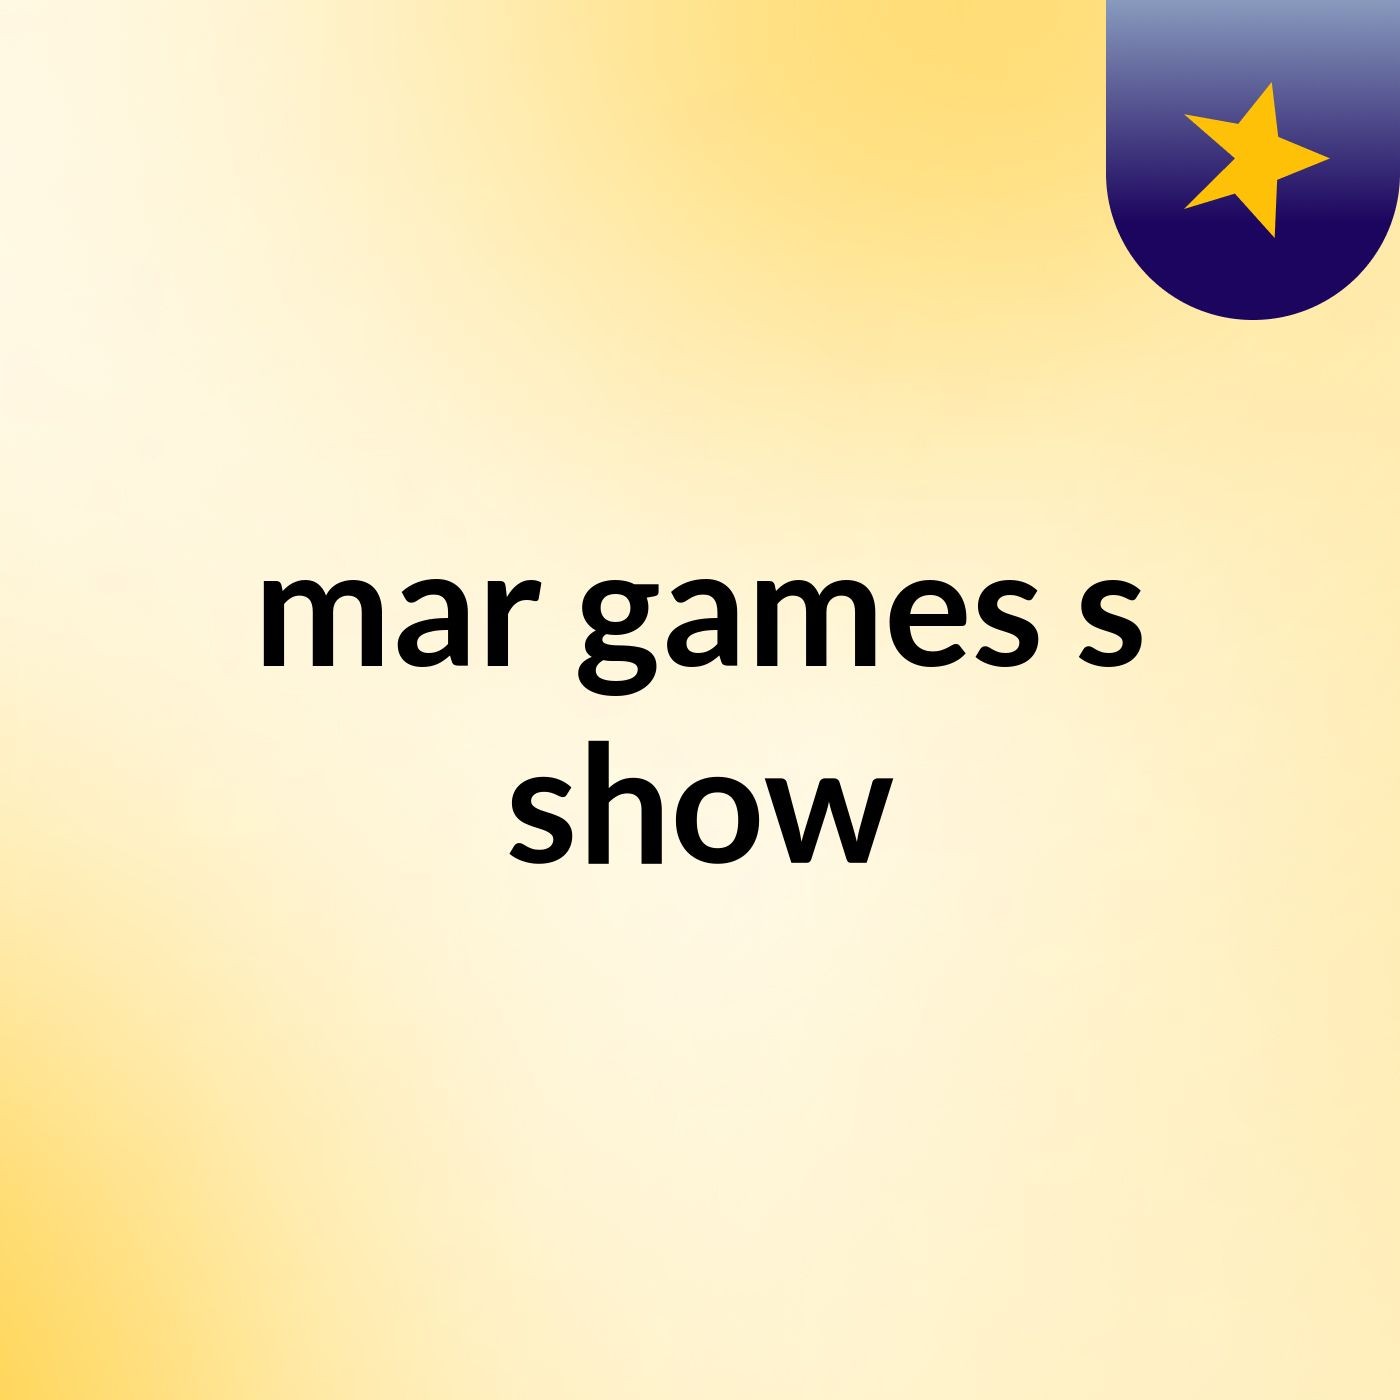 mar games's show